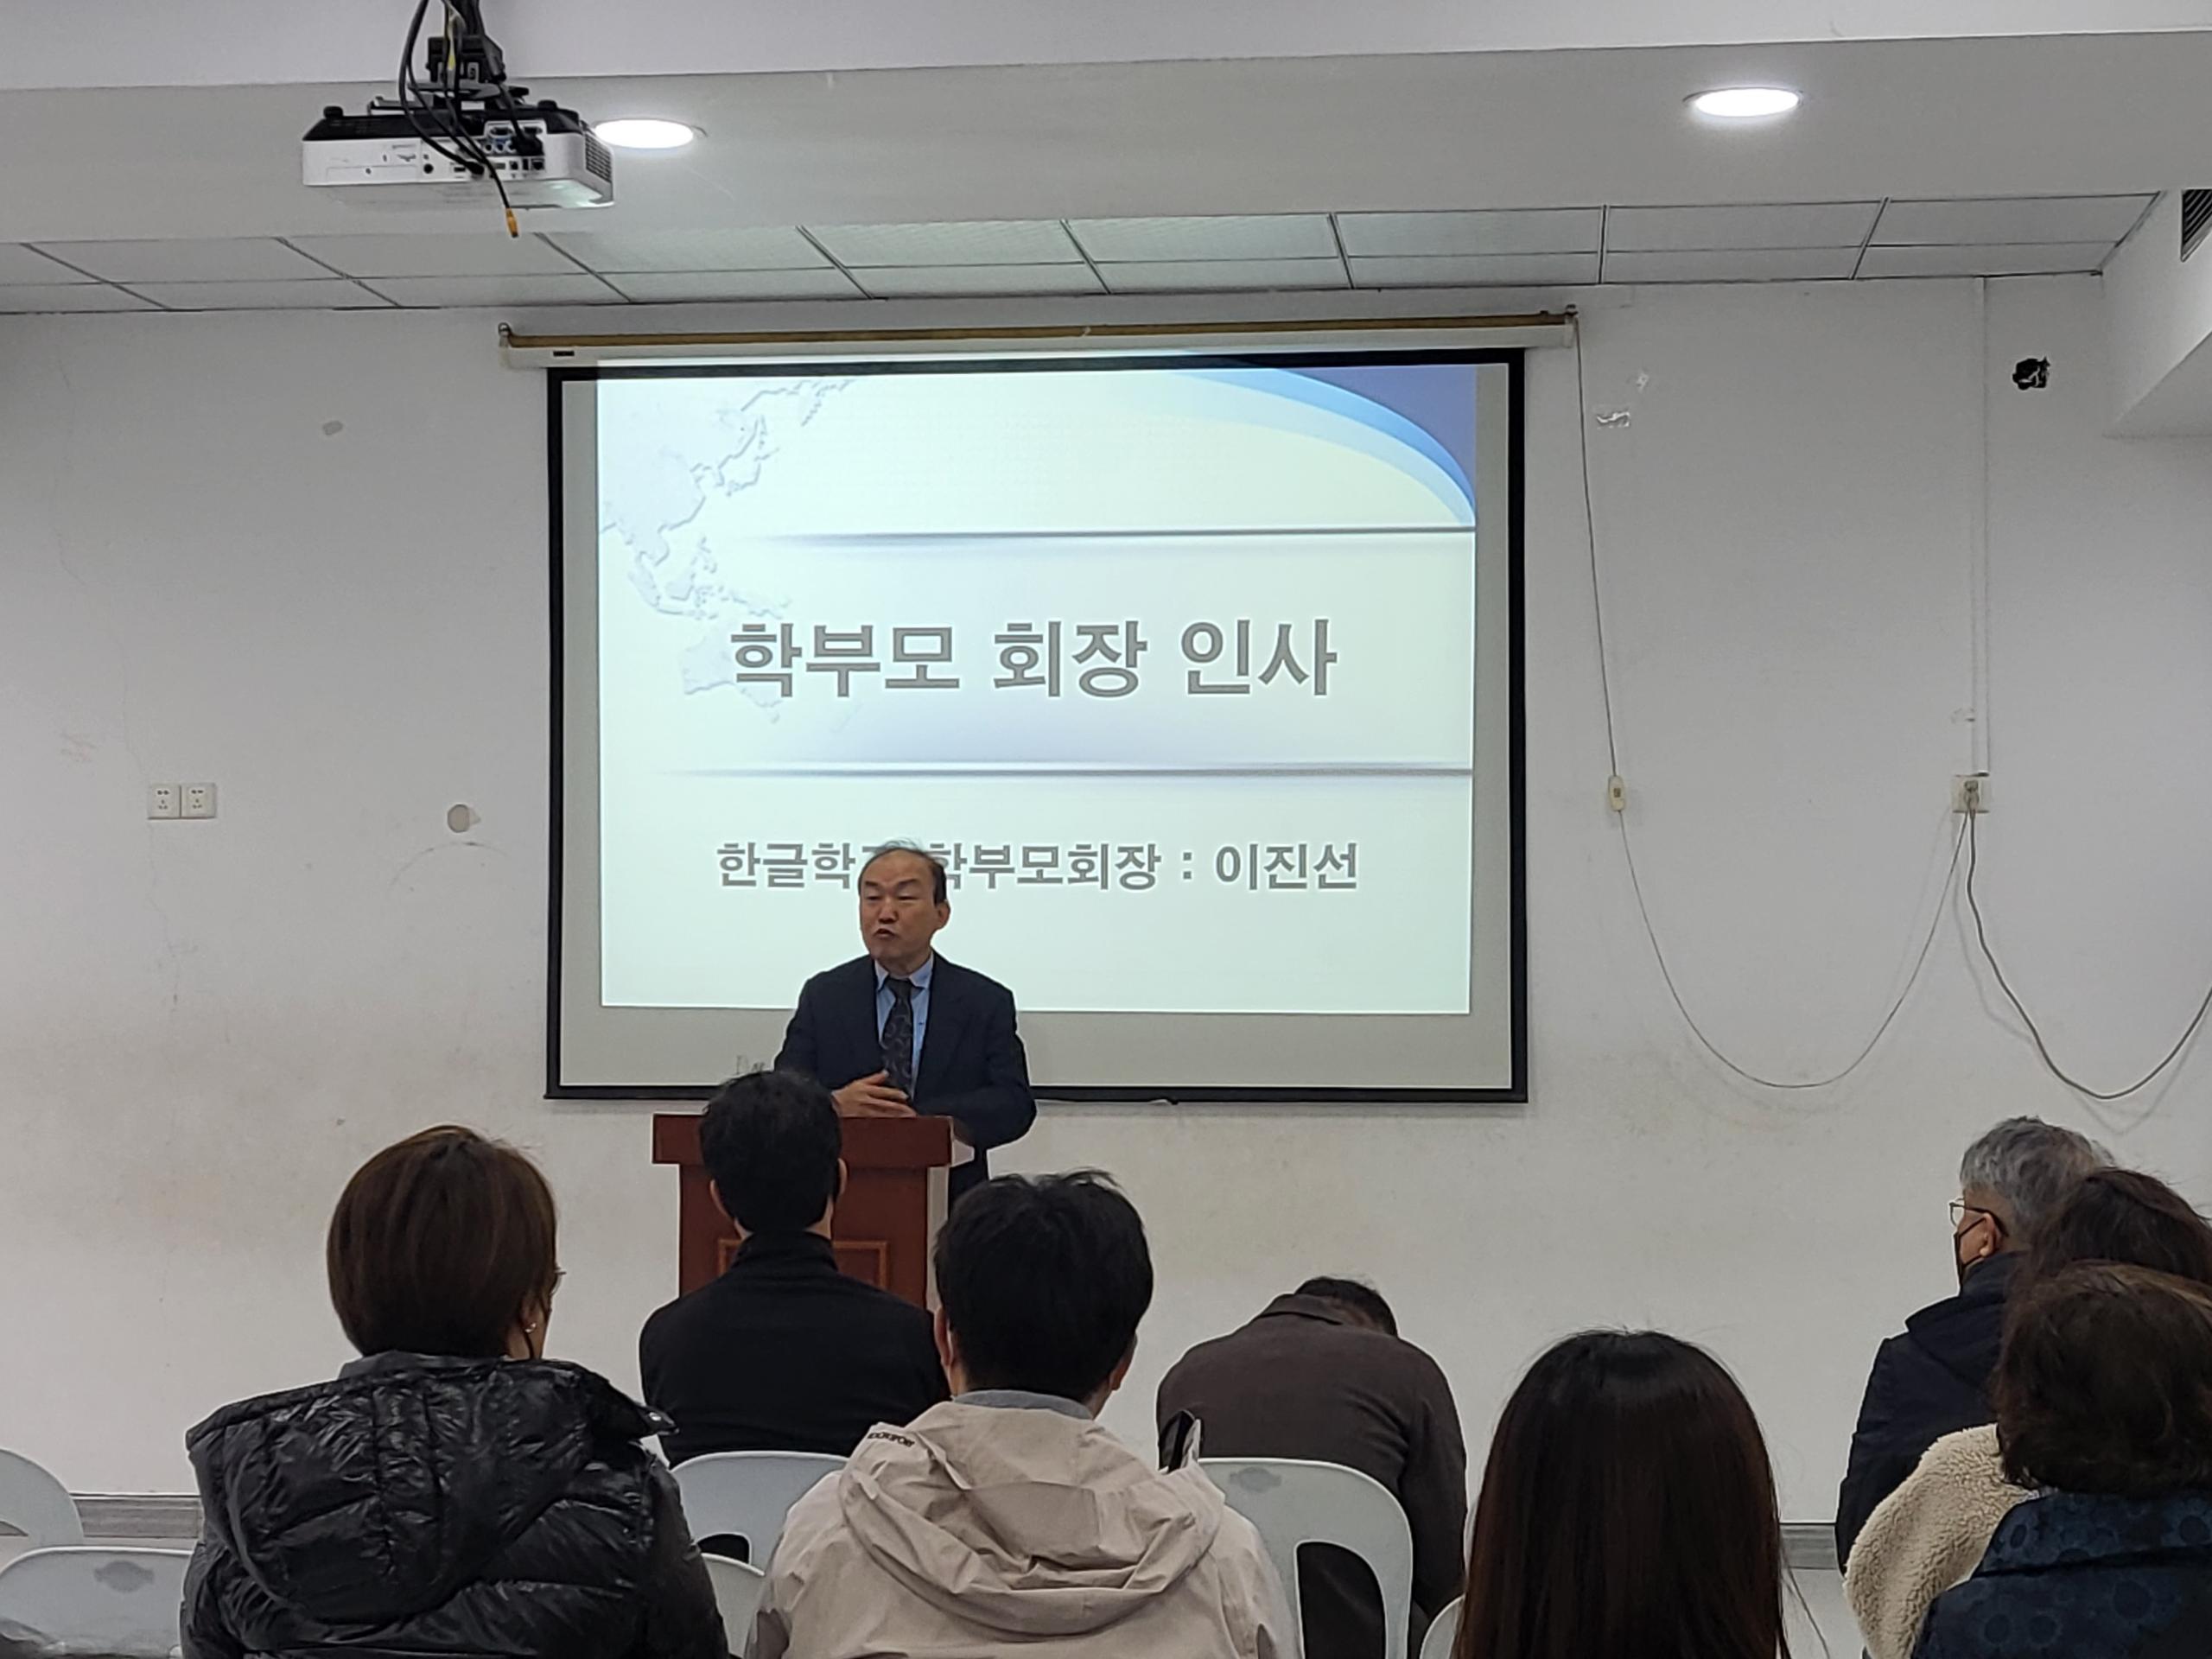 Leader of the parents' meeting delivers greetings during a parents' meeting of the Hangeul School in Beijing